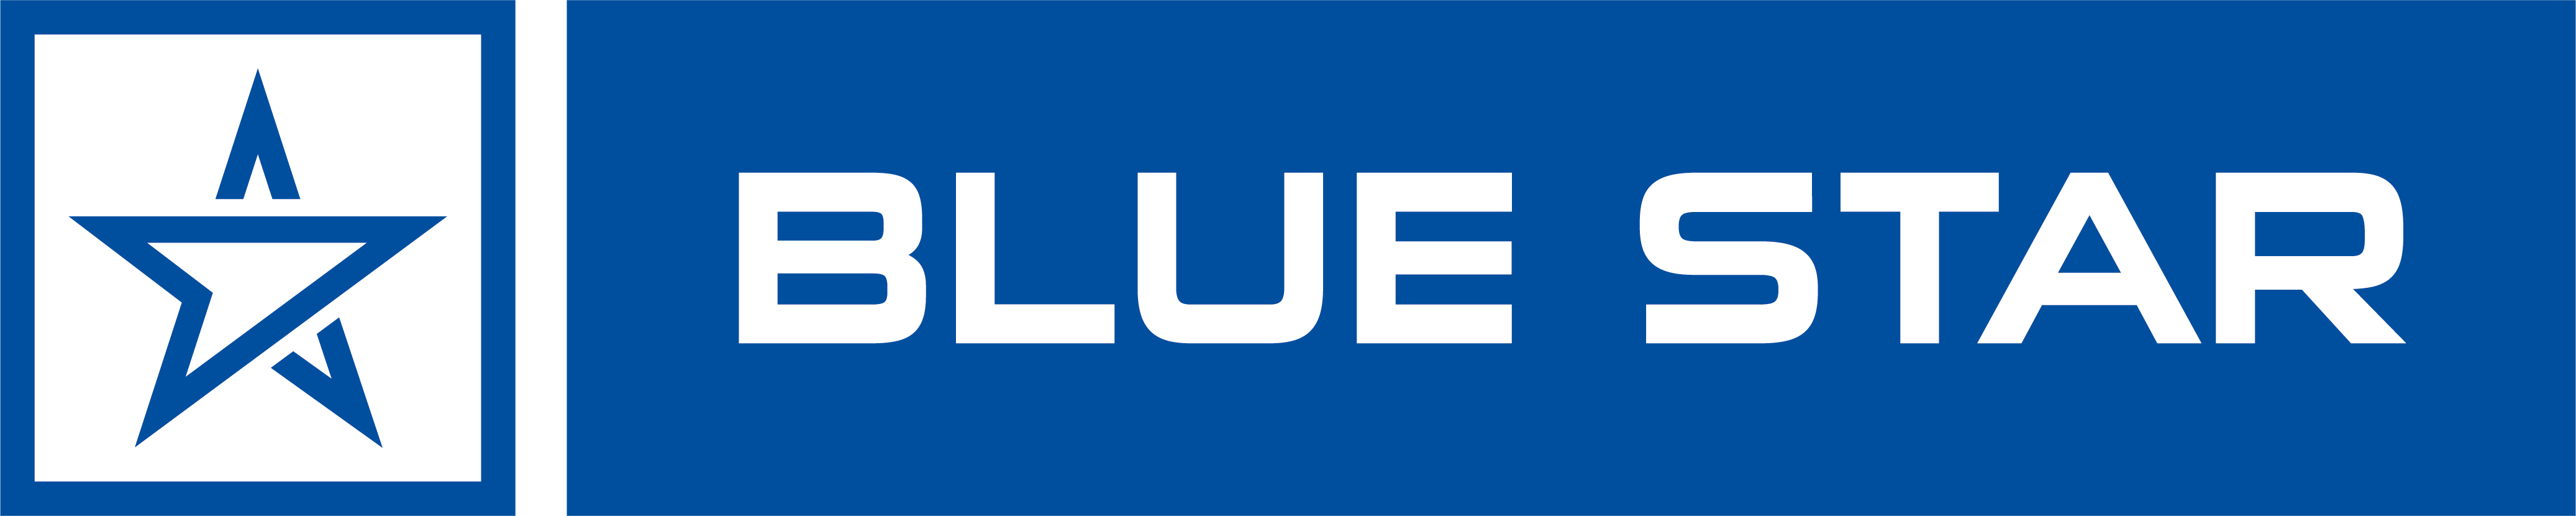 Blue_Star_primary_logo